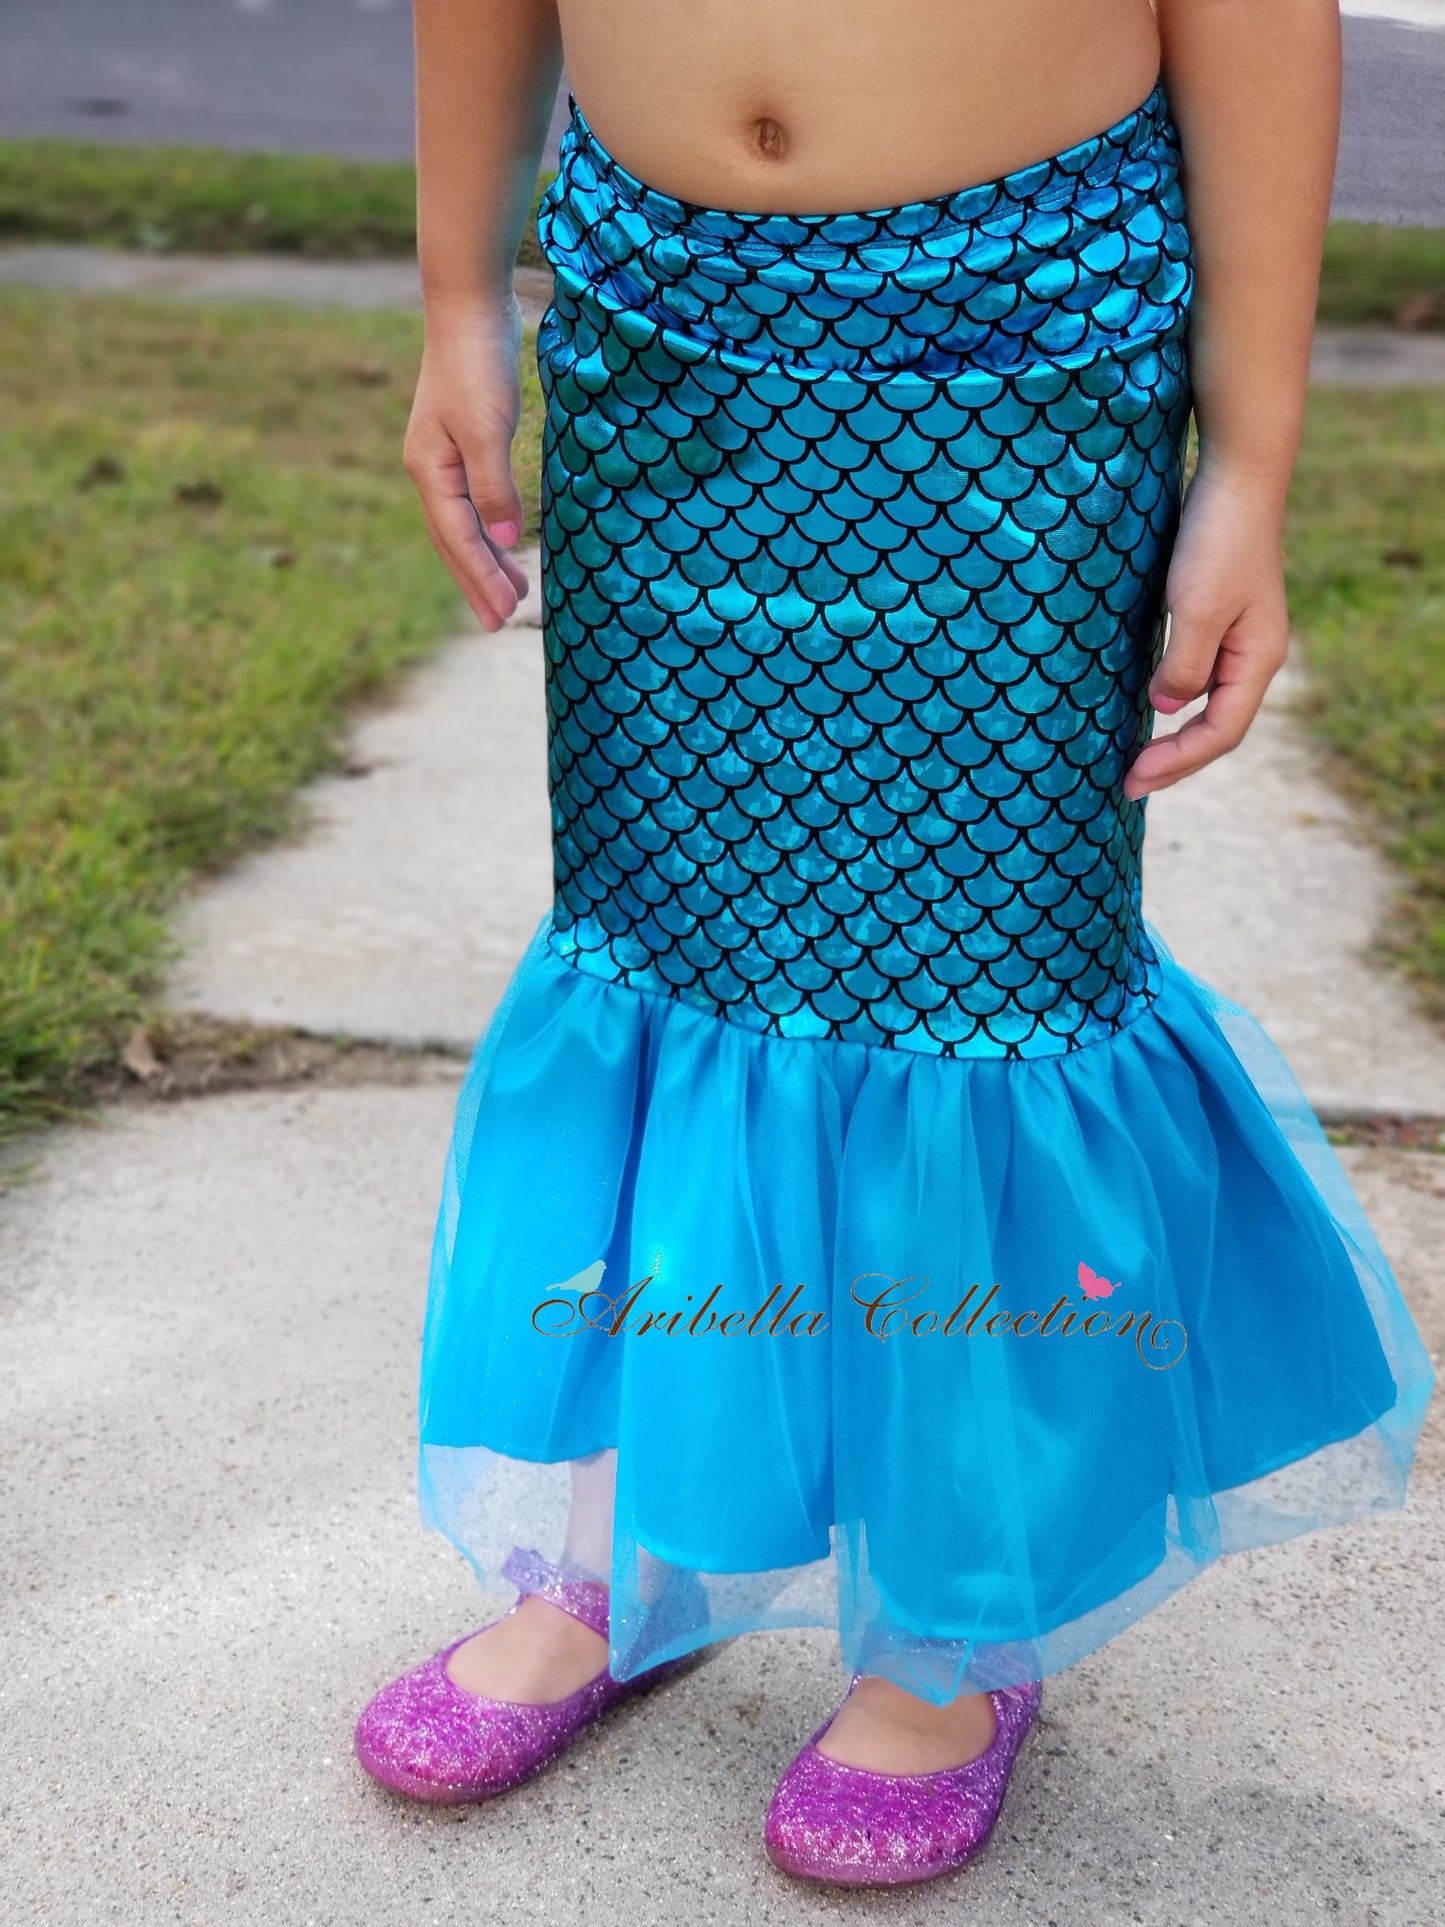 Mermaid Walkable Tail Skirt - Aqua Blue, Emerald Green, or Iridescent - Aribella Collection, Inc.